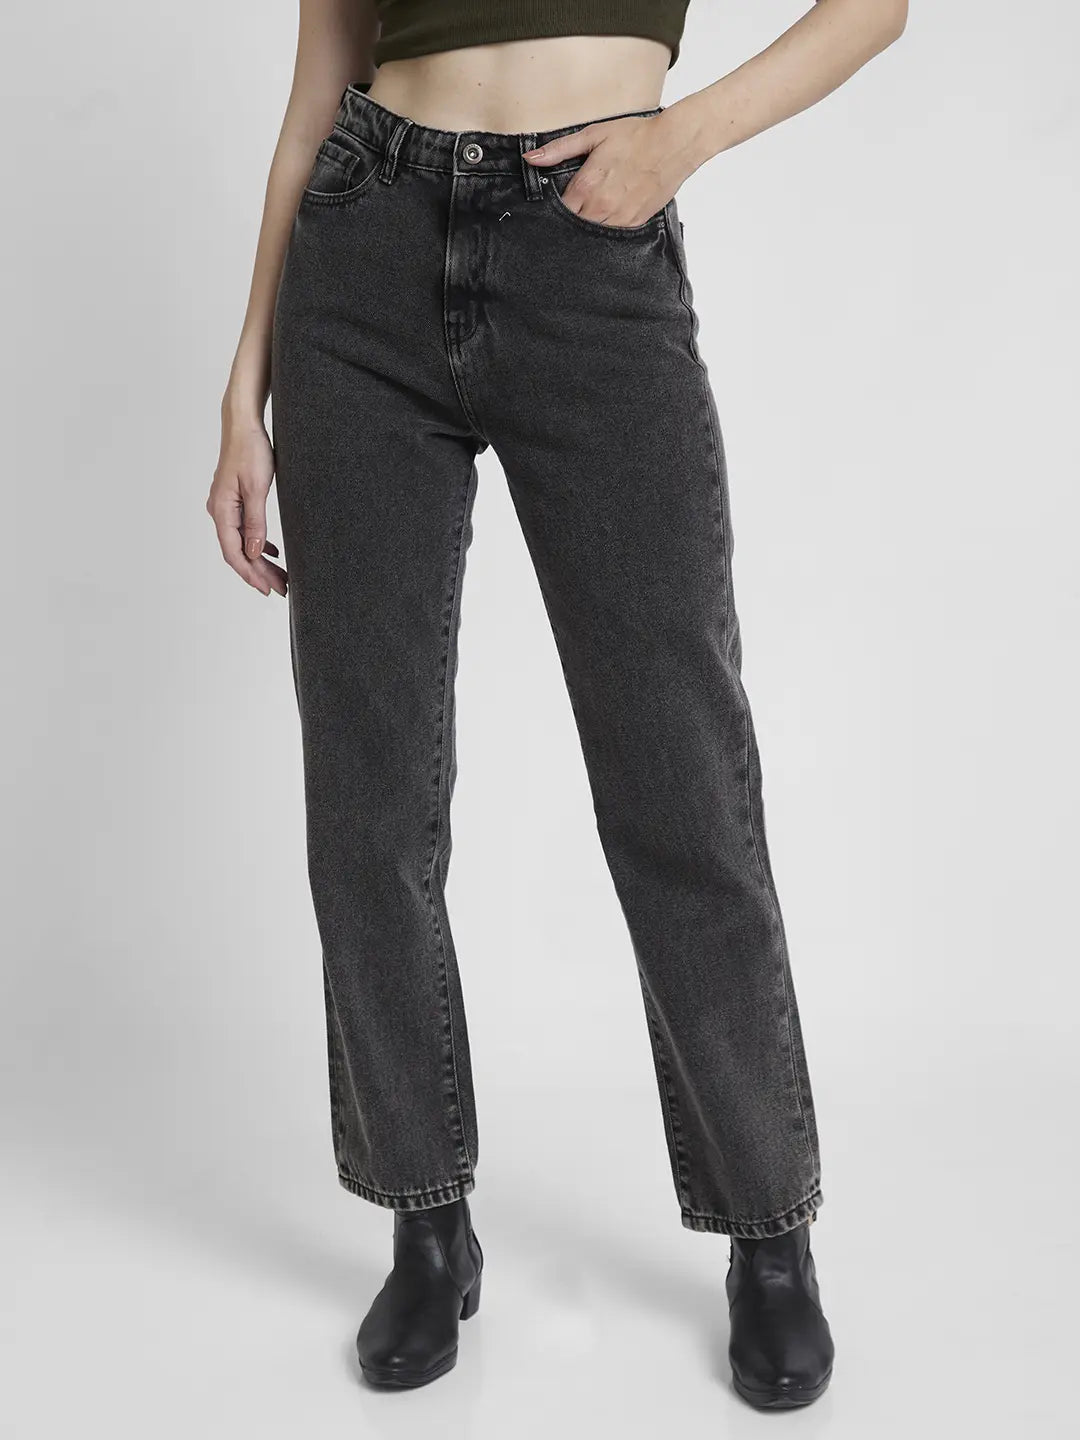 Spykar Women Charcoal Grey Cotton Straight Fit Regular Length Clean Look Jeans -(Bella)